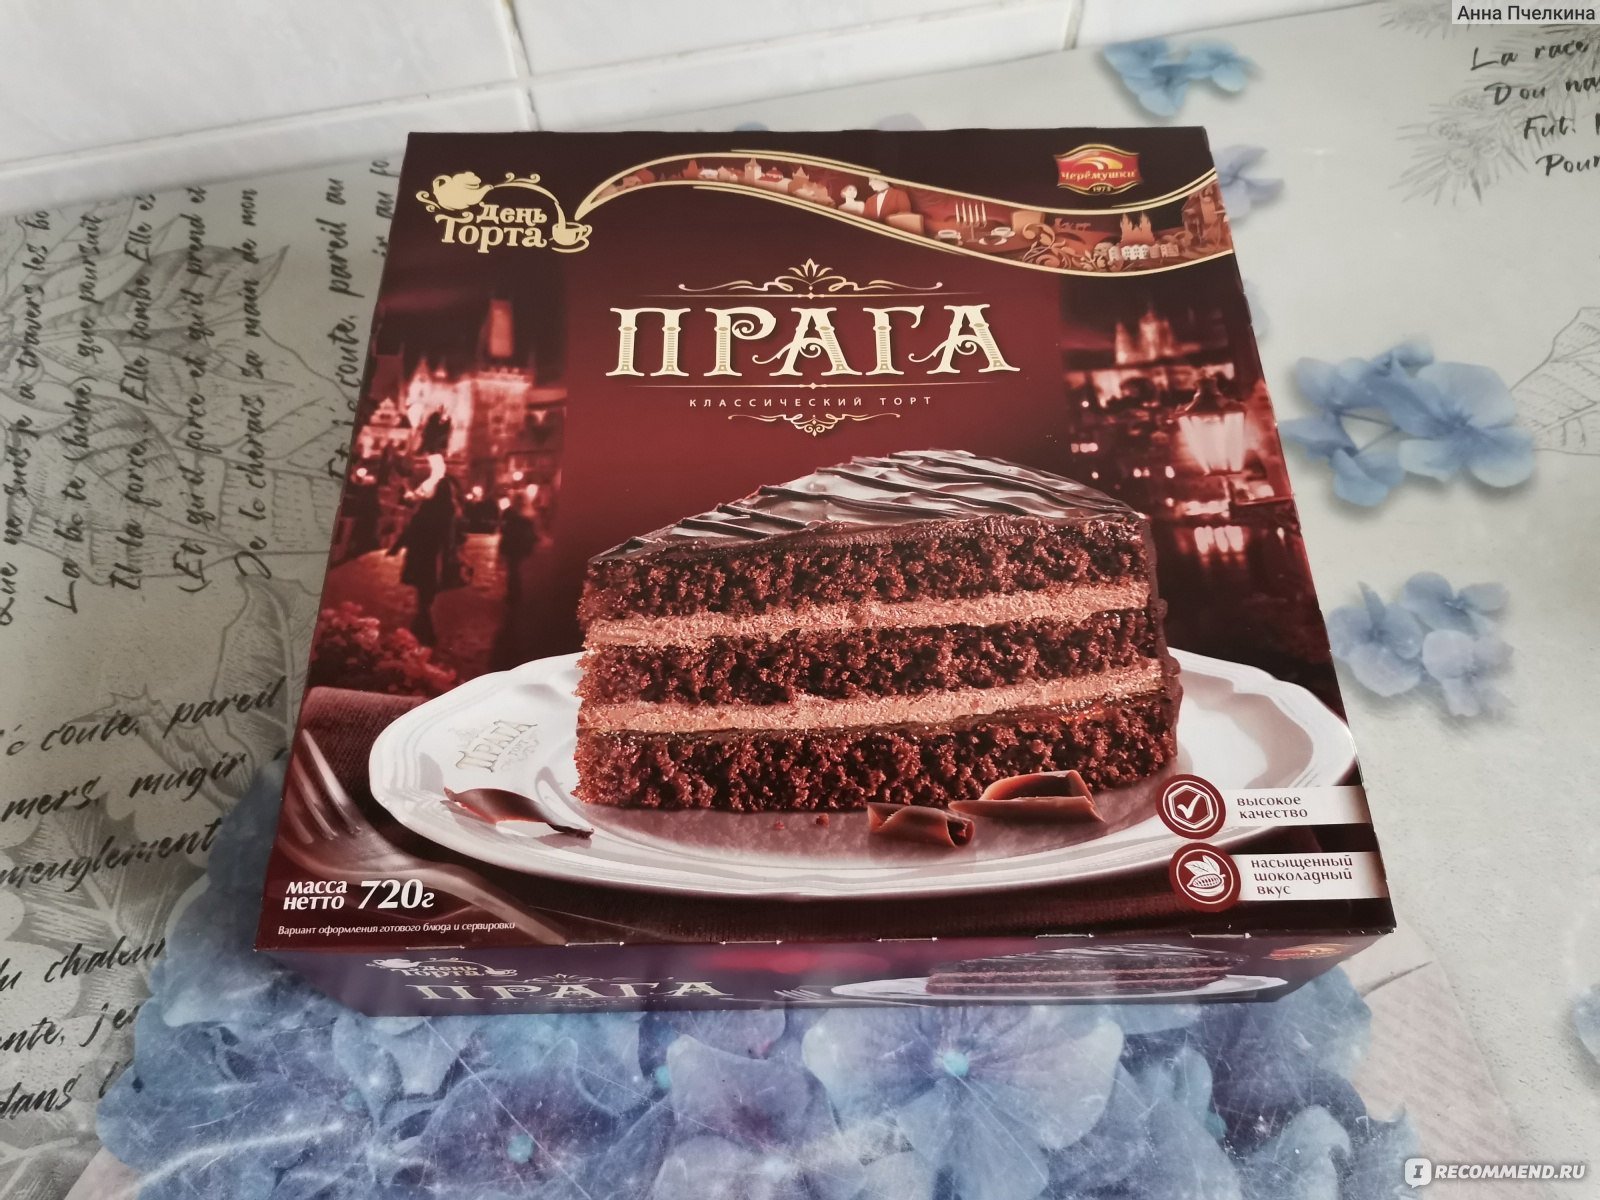 Торт прага черемушки. Торт Черемушки Прага. Торт день торта Прага. День торта Прага. Торт бисквитный Прага.